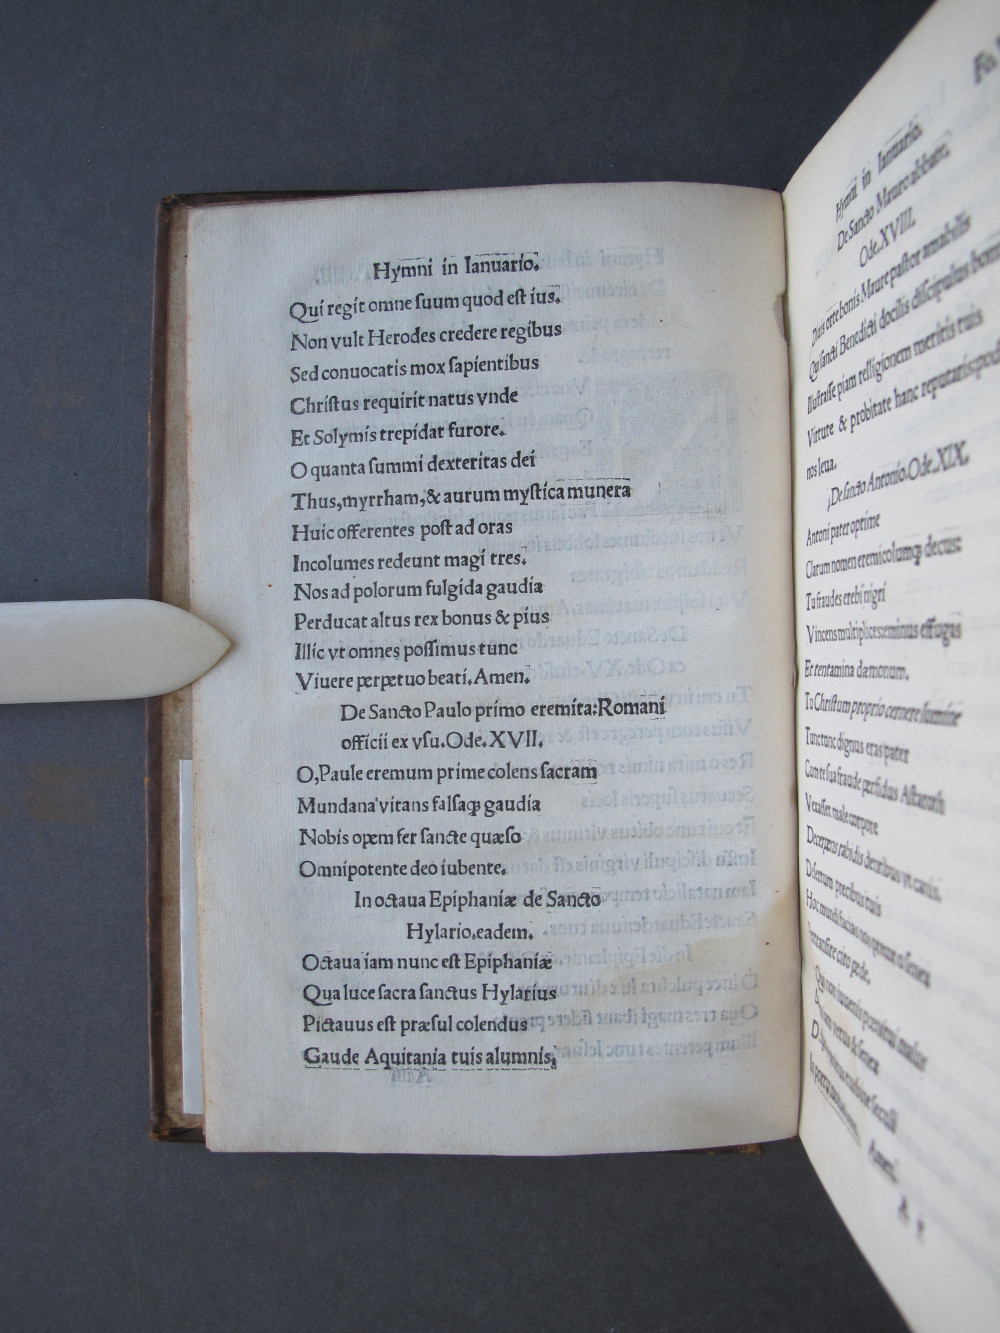 Folio 4 verso